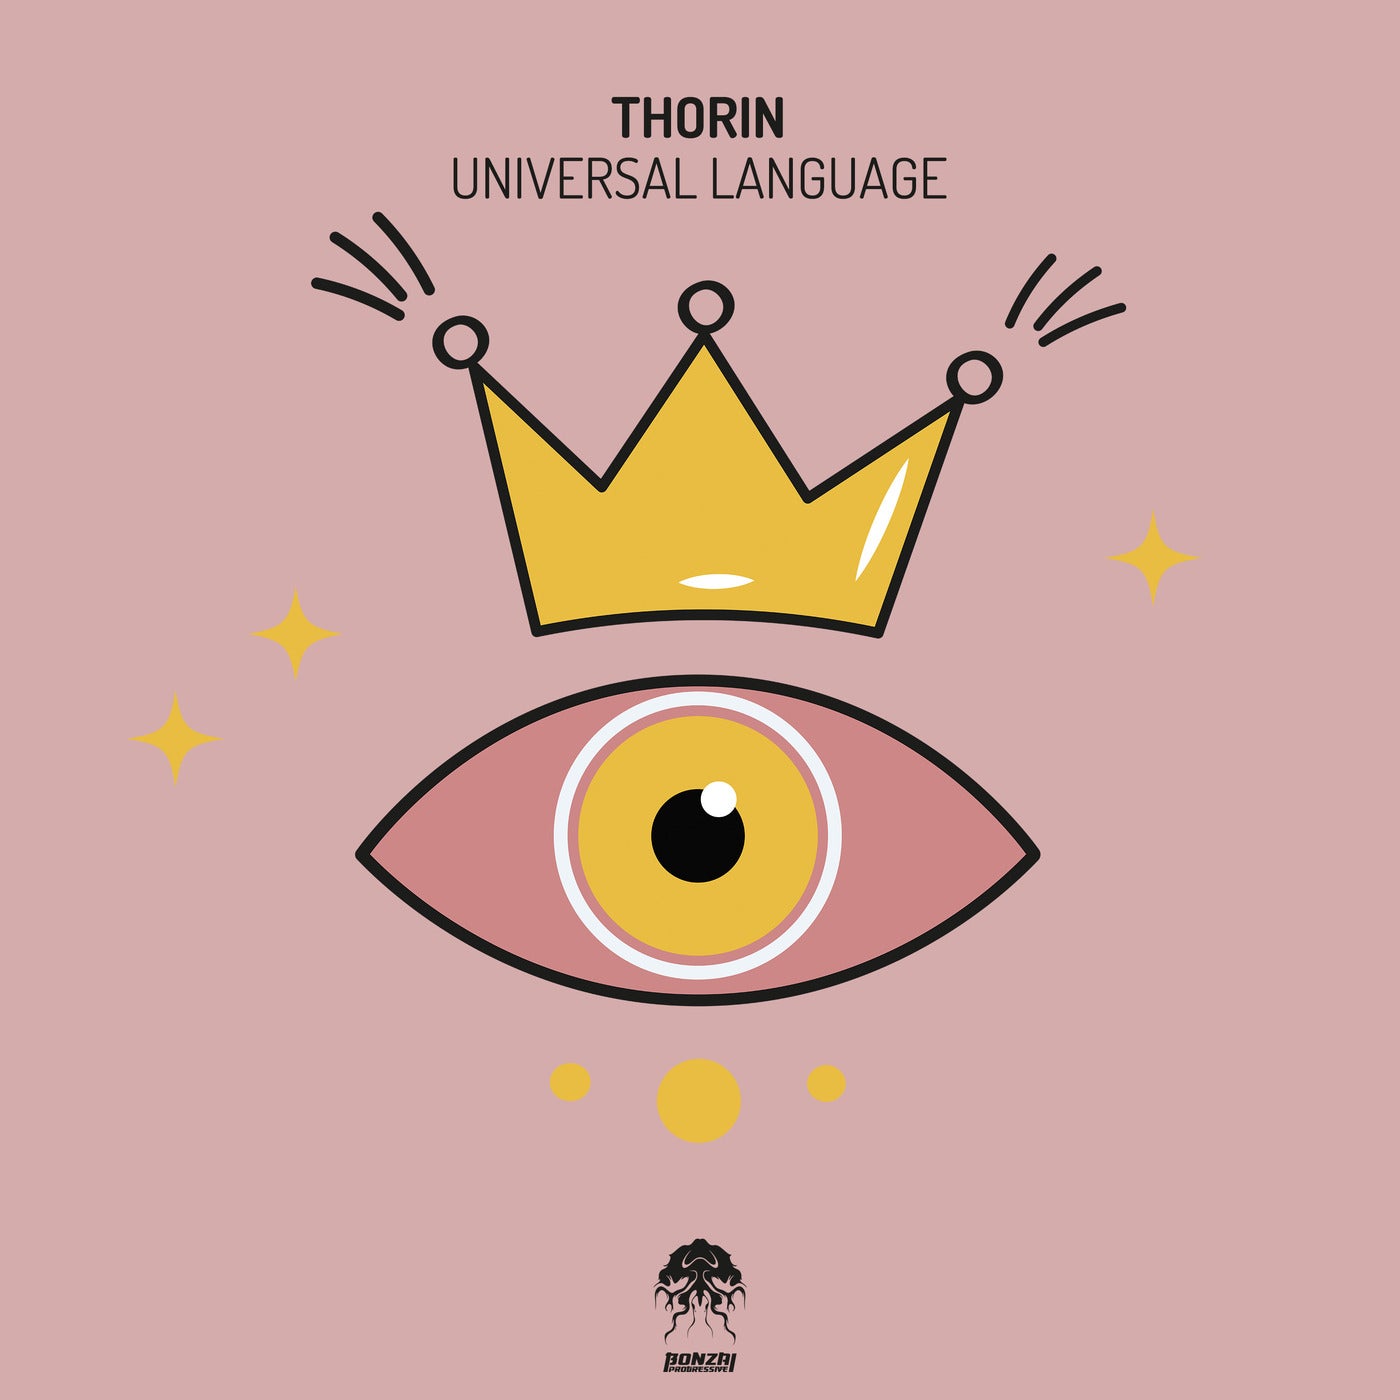 thorin-universal-language-bonzai-progressive-music-downloads-on